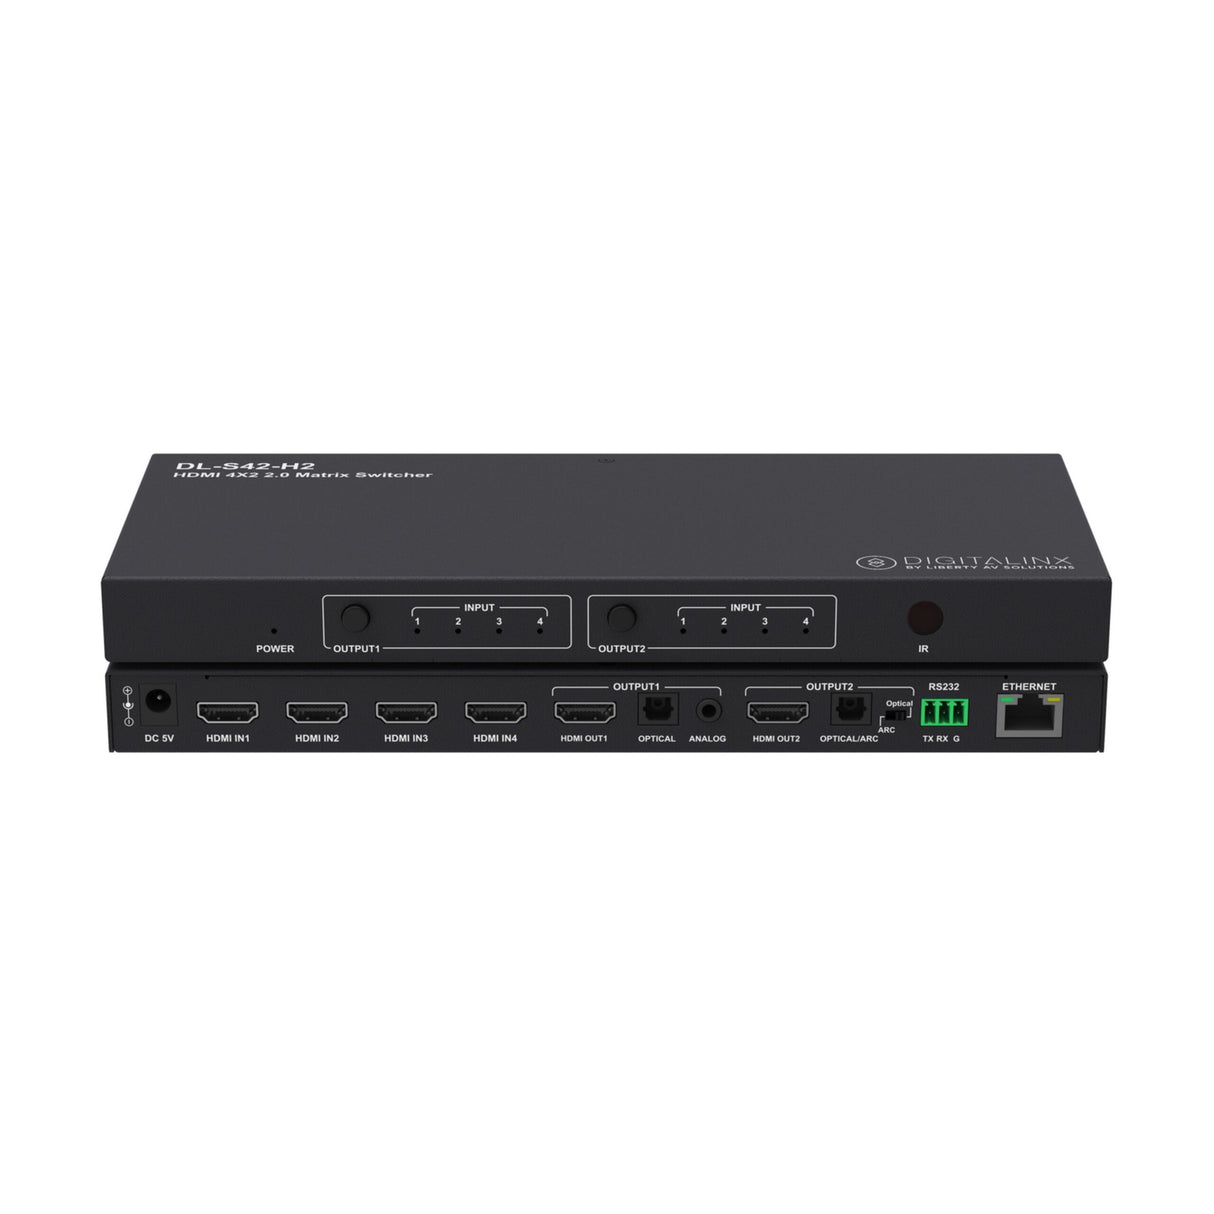 Digitalinx DL-S42-H2 4 x 2 HDMI 2.0 Matrix Switch